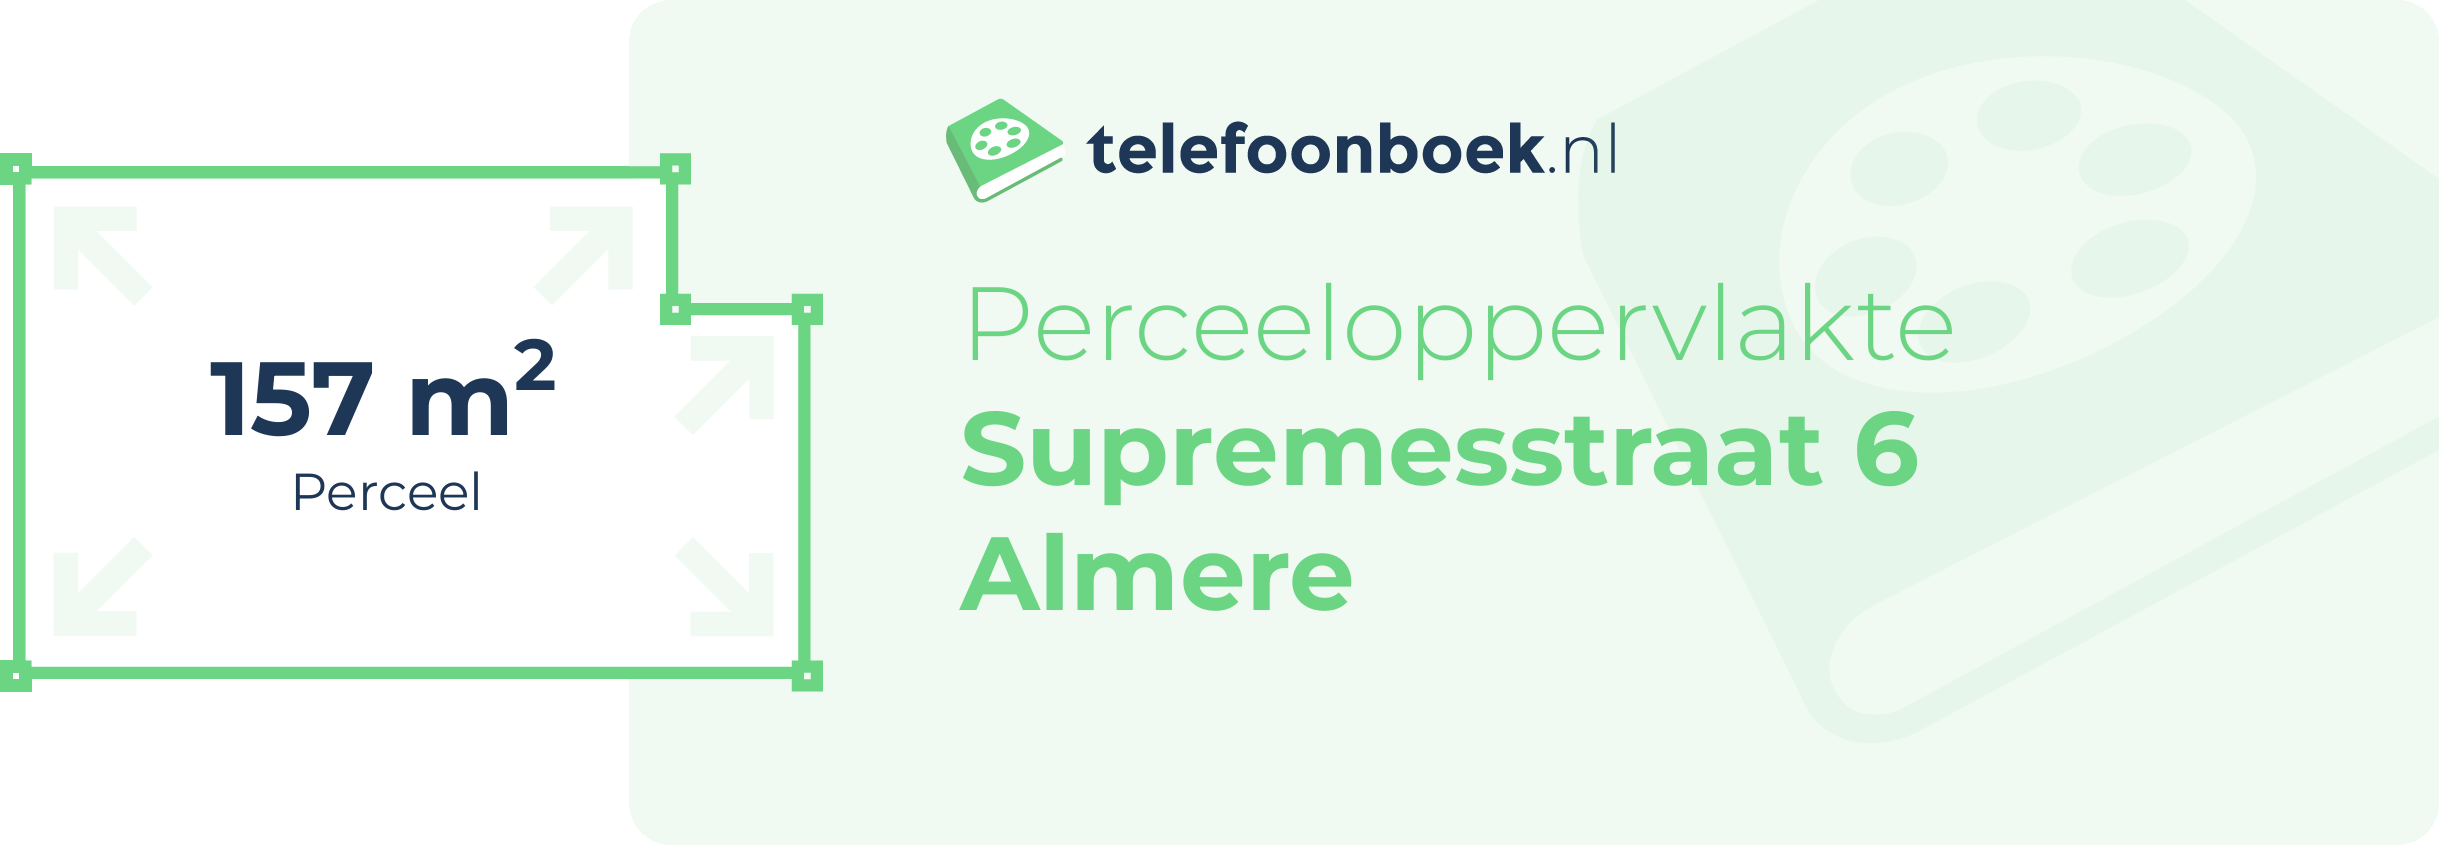 Perceeloppervlakte Supremesstraat 6 Almere